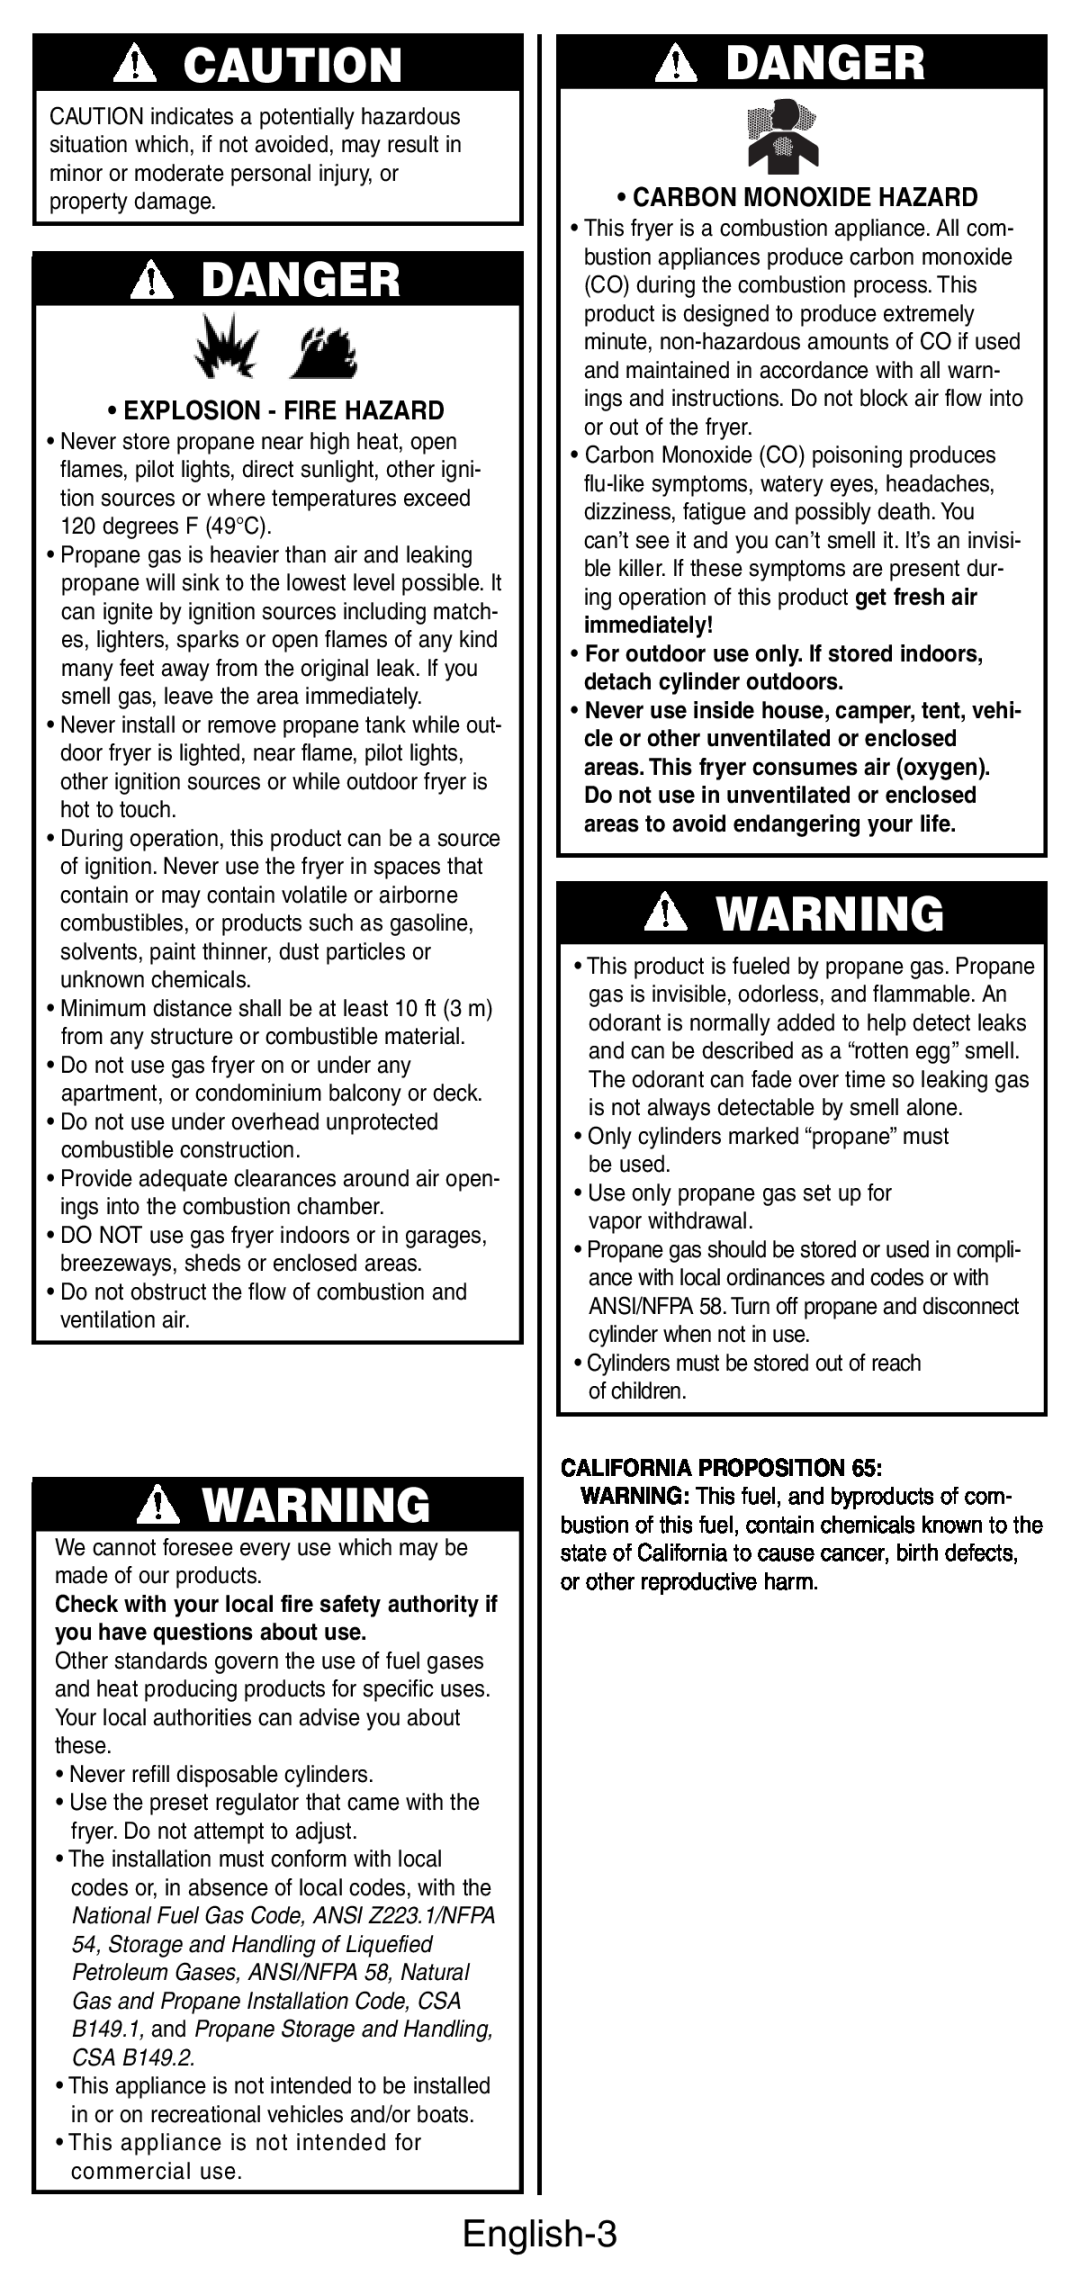 Coleman 9937 instruction manual Danger, English-3, Explosion - Fire Hazard, Carbon Monoxide Hazard, California Proposition 